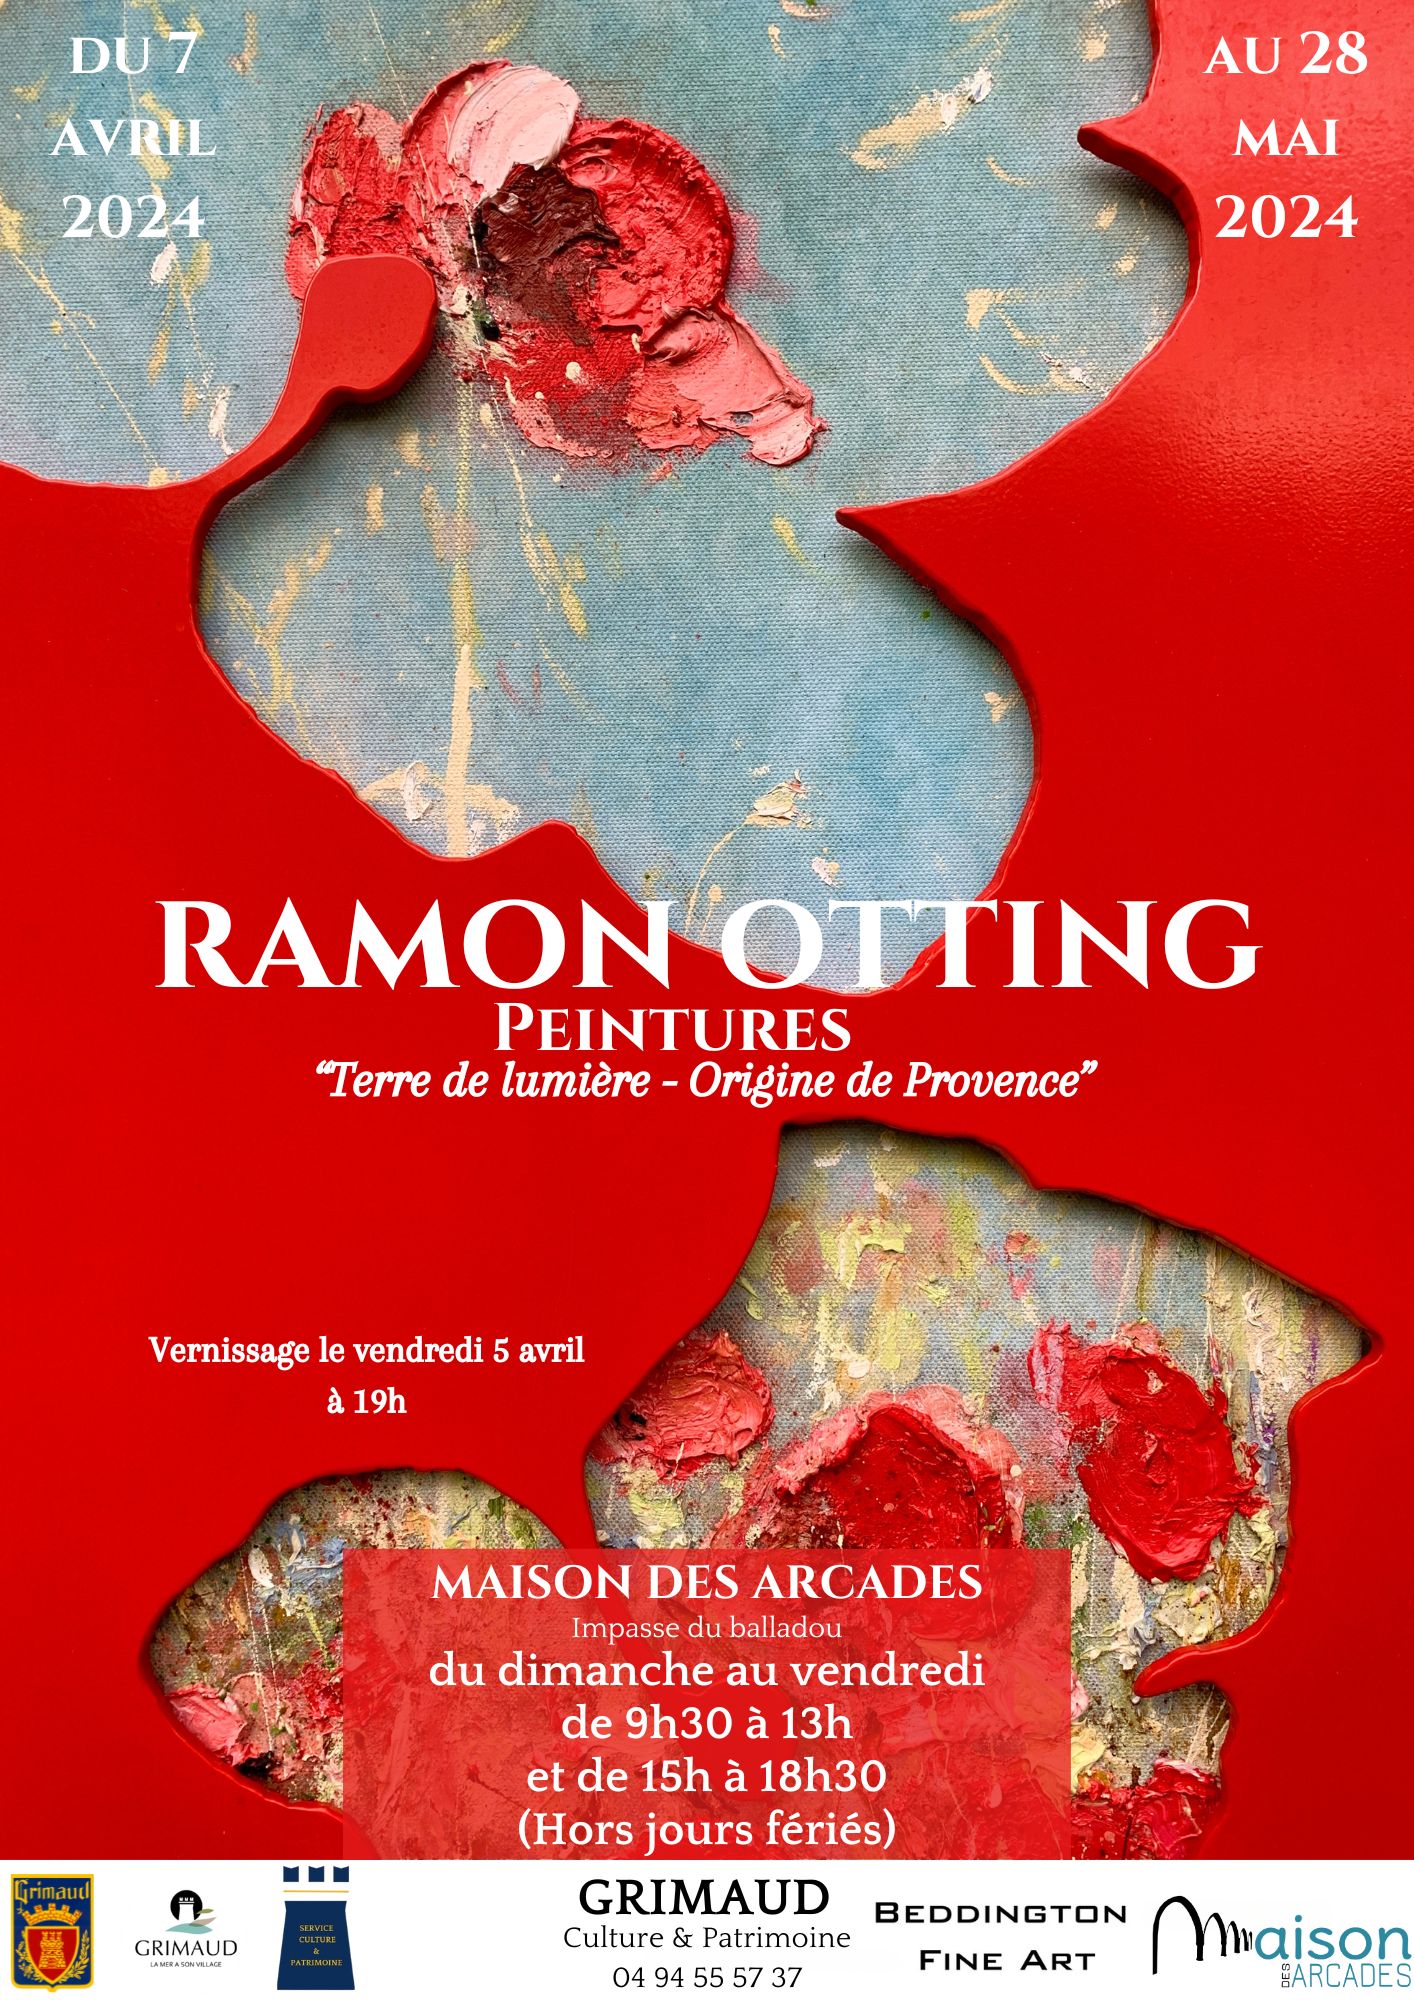 Friday April 5, 2024 - Ramon OTTING exhibition opening